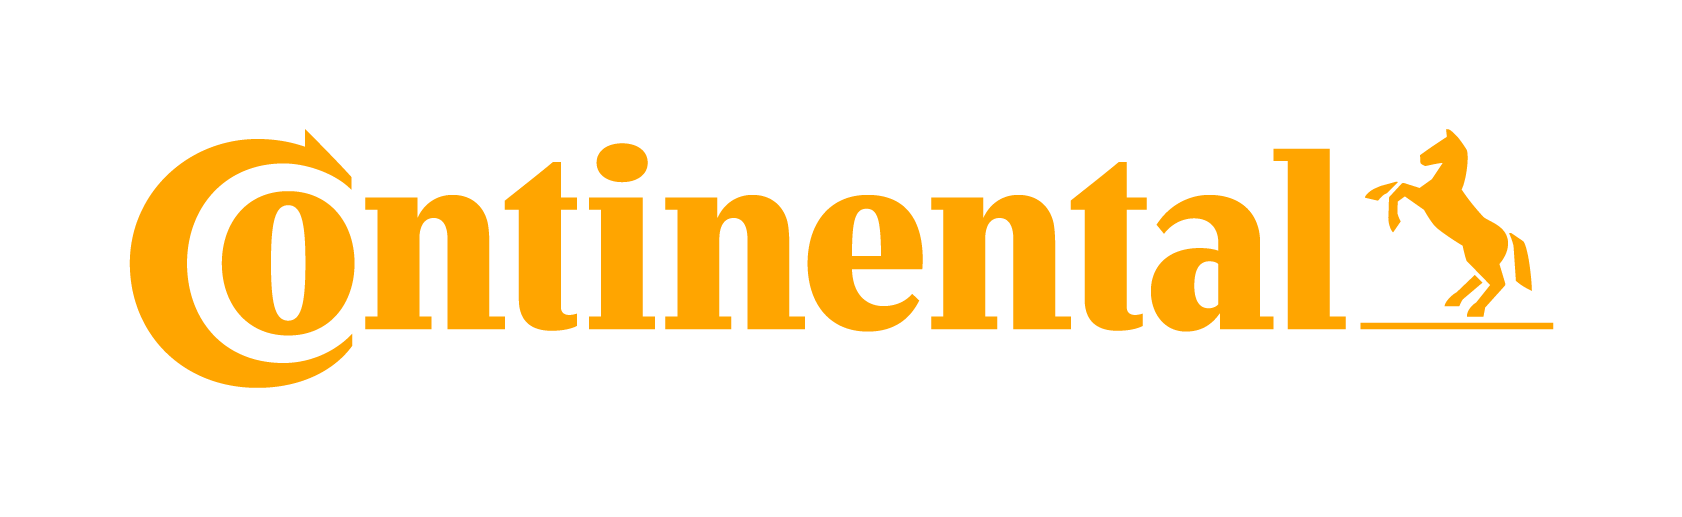 کانتیننتال - Continental